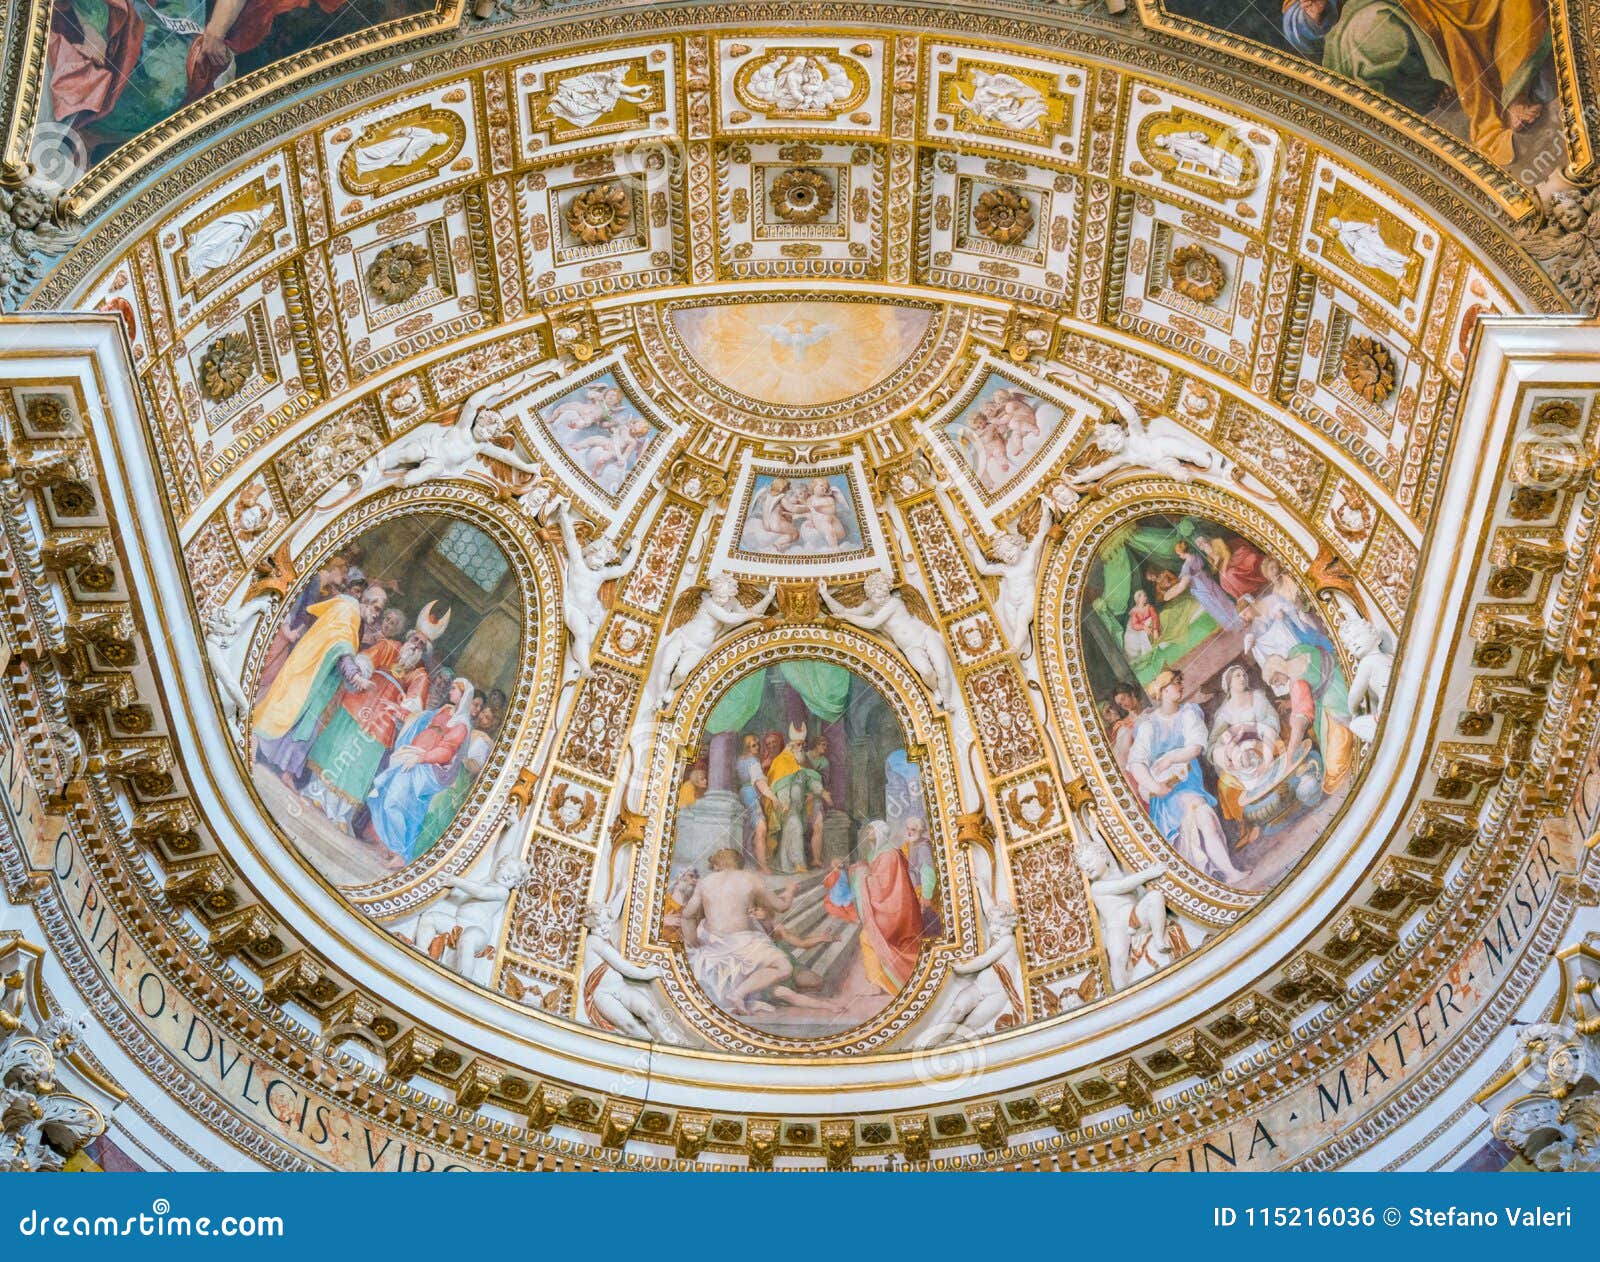 the painted apse by cristoforo casolani, in the church of santa maria ai monti, in rome, italy.